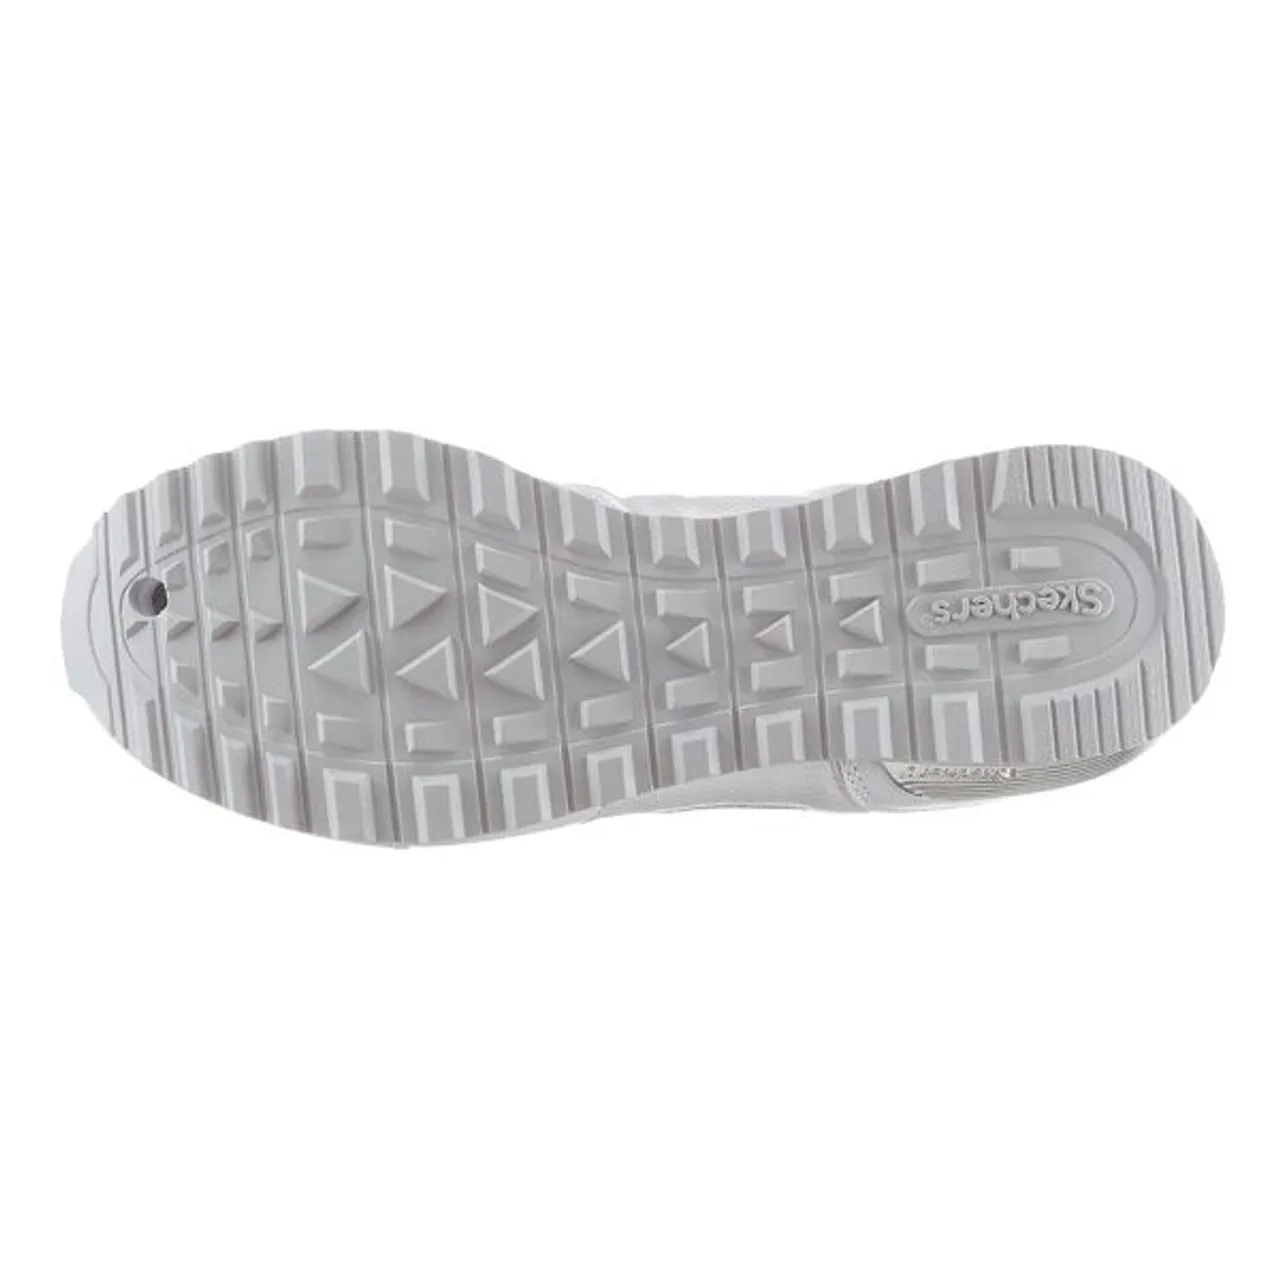 Sneaker SKECHERS "Gold´n Gurl" Gr. 36, weiß (weiß, silberfarben) Damen Schuhe Modernsneaker Sneaker low Bestseller